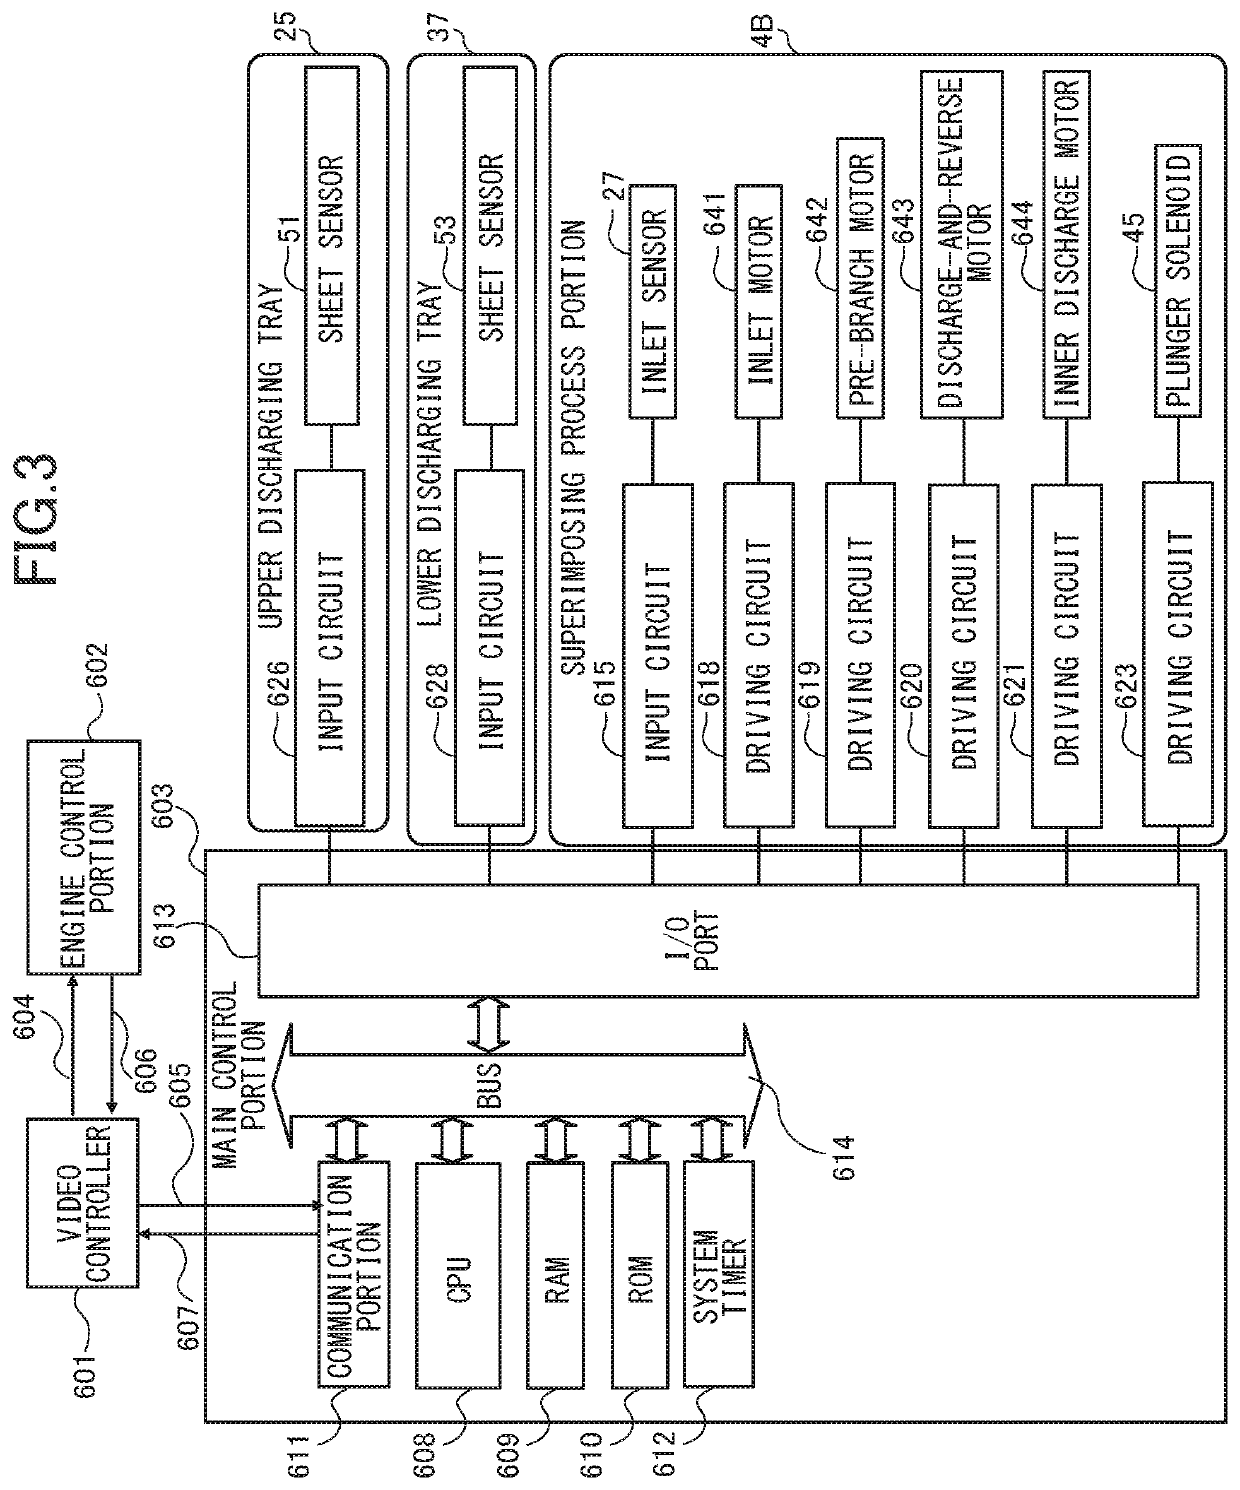 Sheet discharging apparatus, sheet processing apparatus, and image forming system